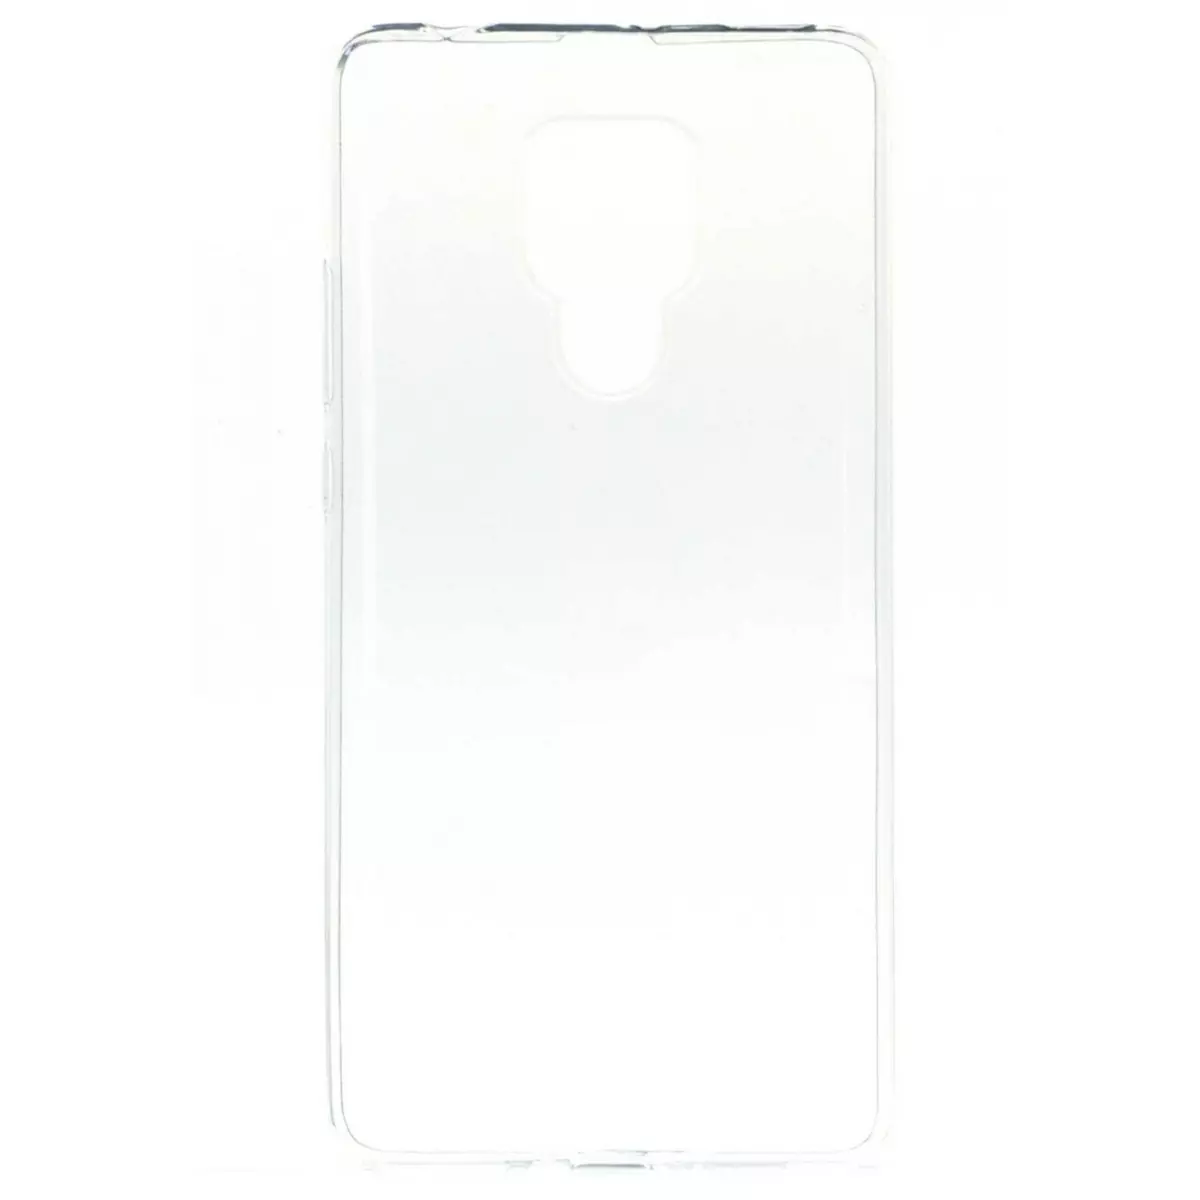 amahousse Coque Huawei Mate 20 X souple transparente ultra-fine